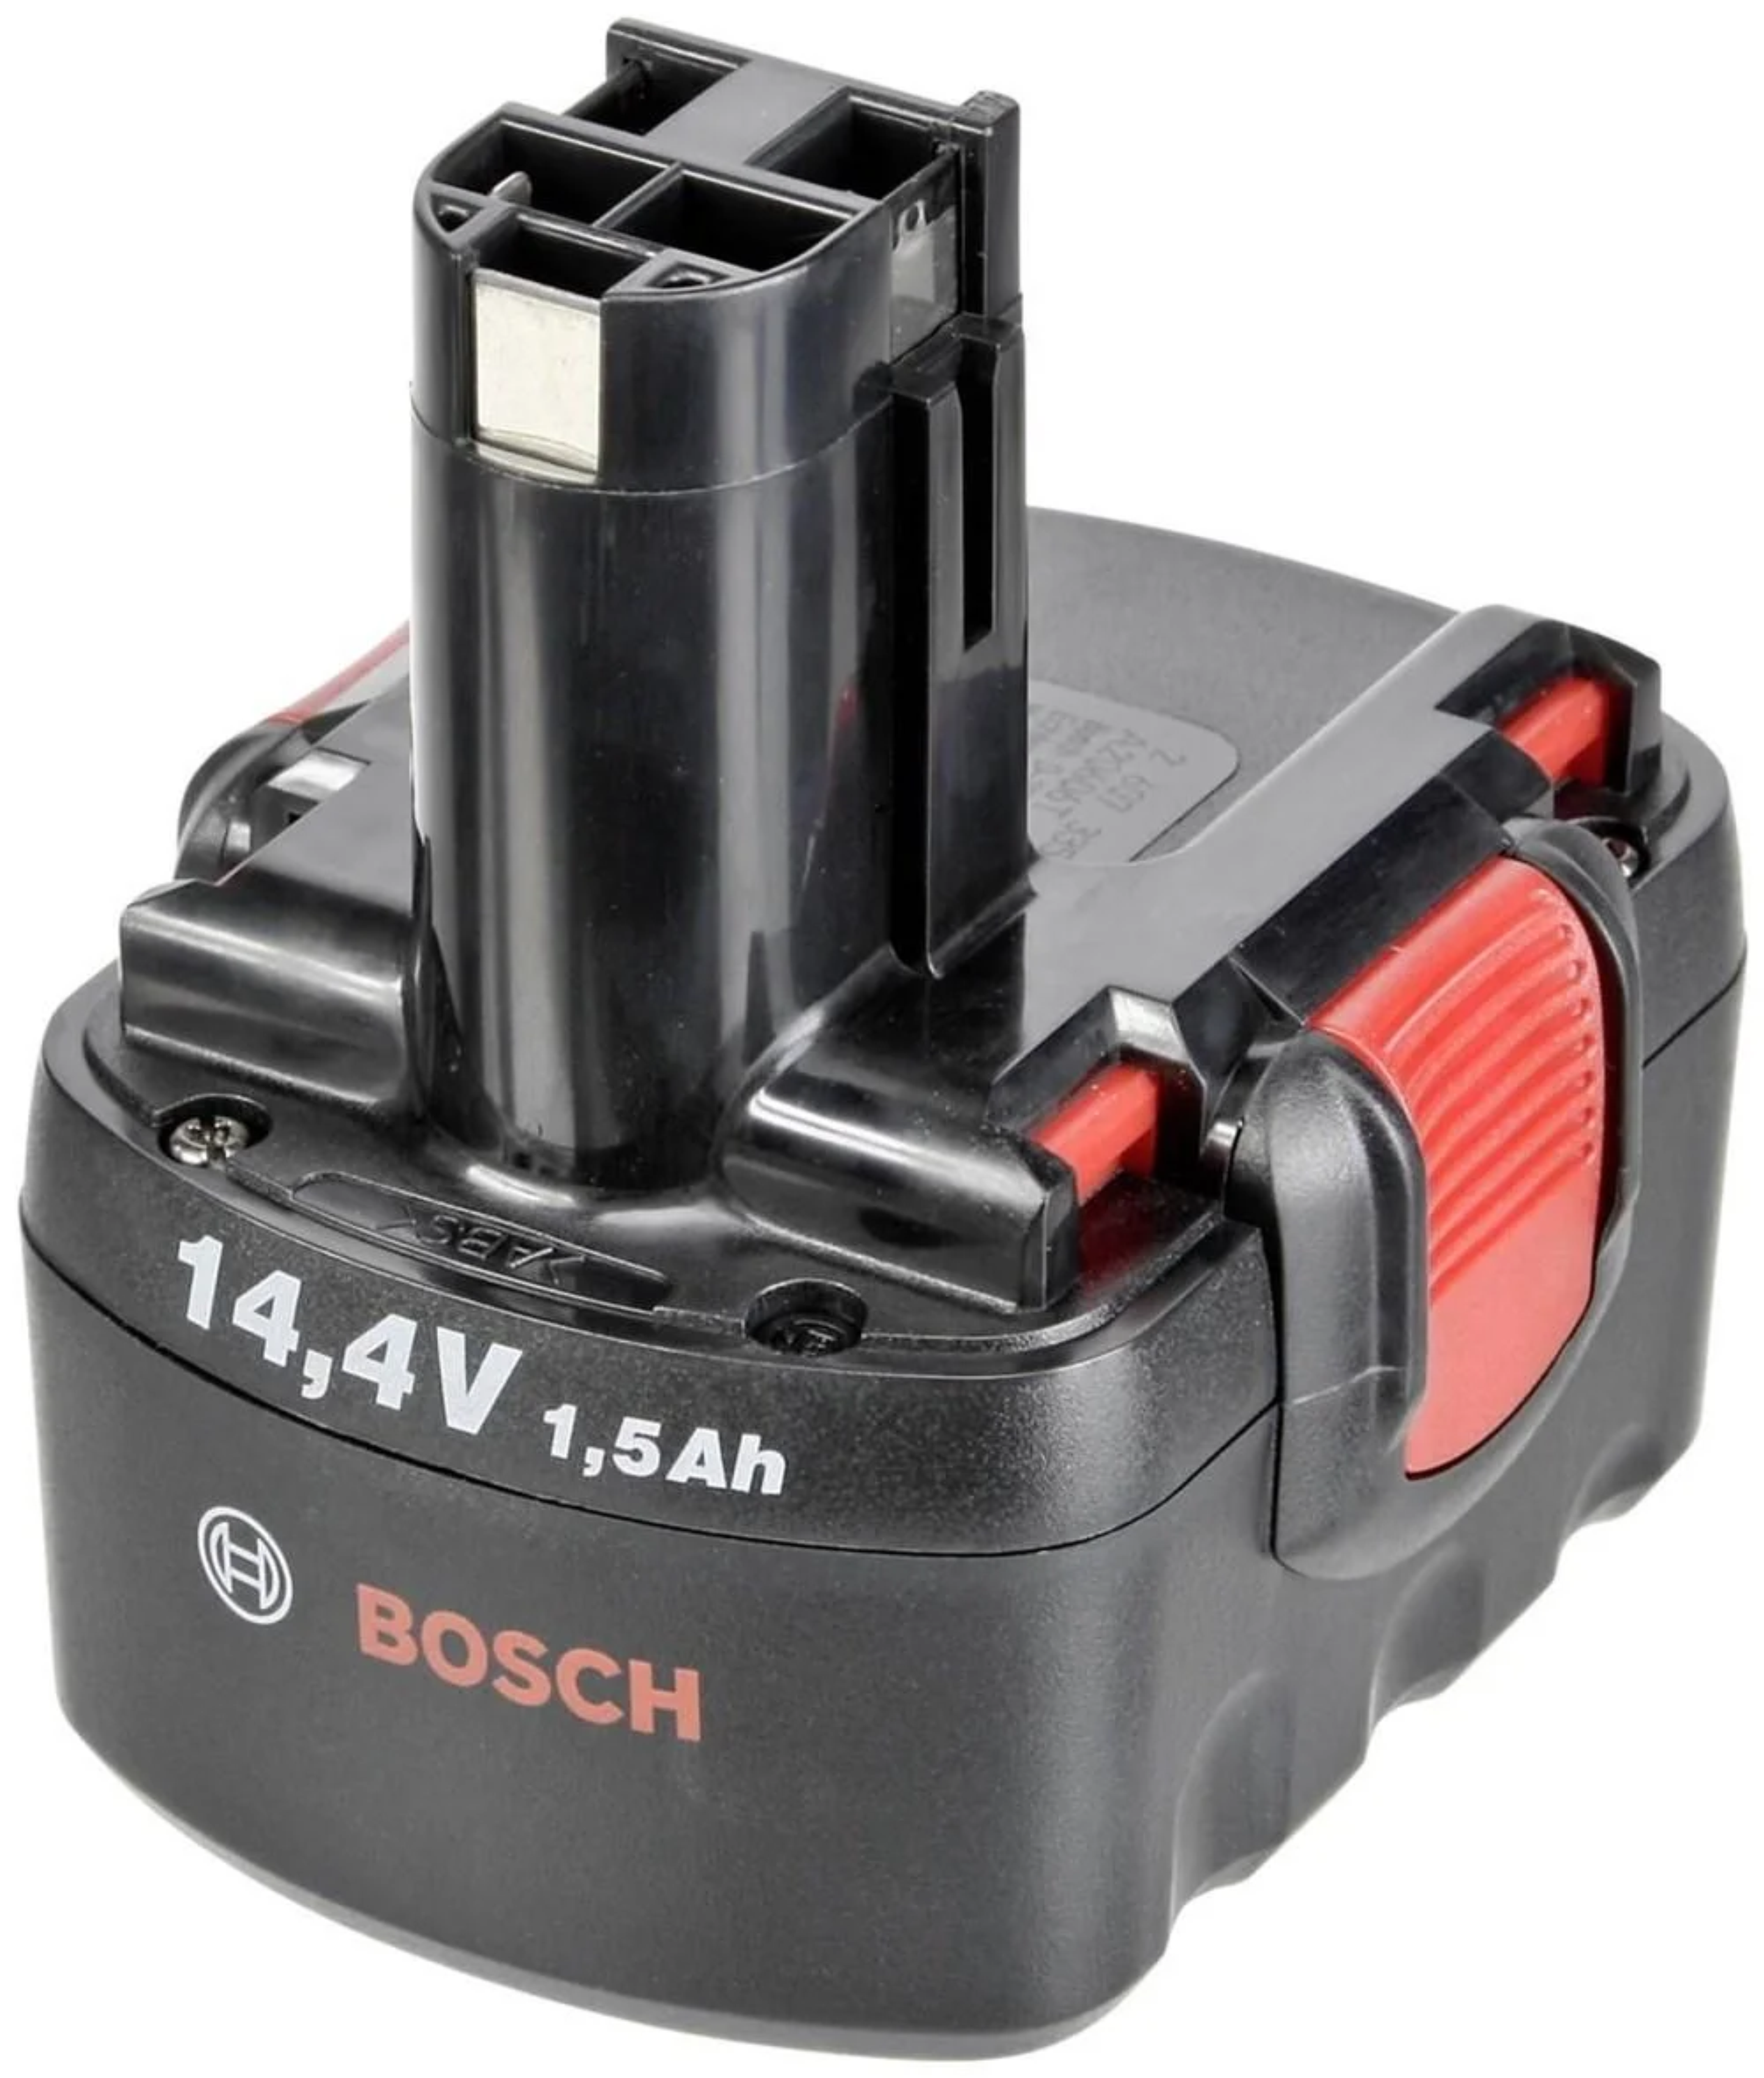 Аккумулятор 1.5 ач. Аккумулятор для шуруповерта Bosch 14.4v 1.5Ah. Аккумуляторная батарея 14.4 в 1.5 Ач бош. Шуруповерта Bosch 14.4v 1.5Ah. Аккумулятор для шуруповерта бош 14.4.